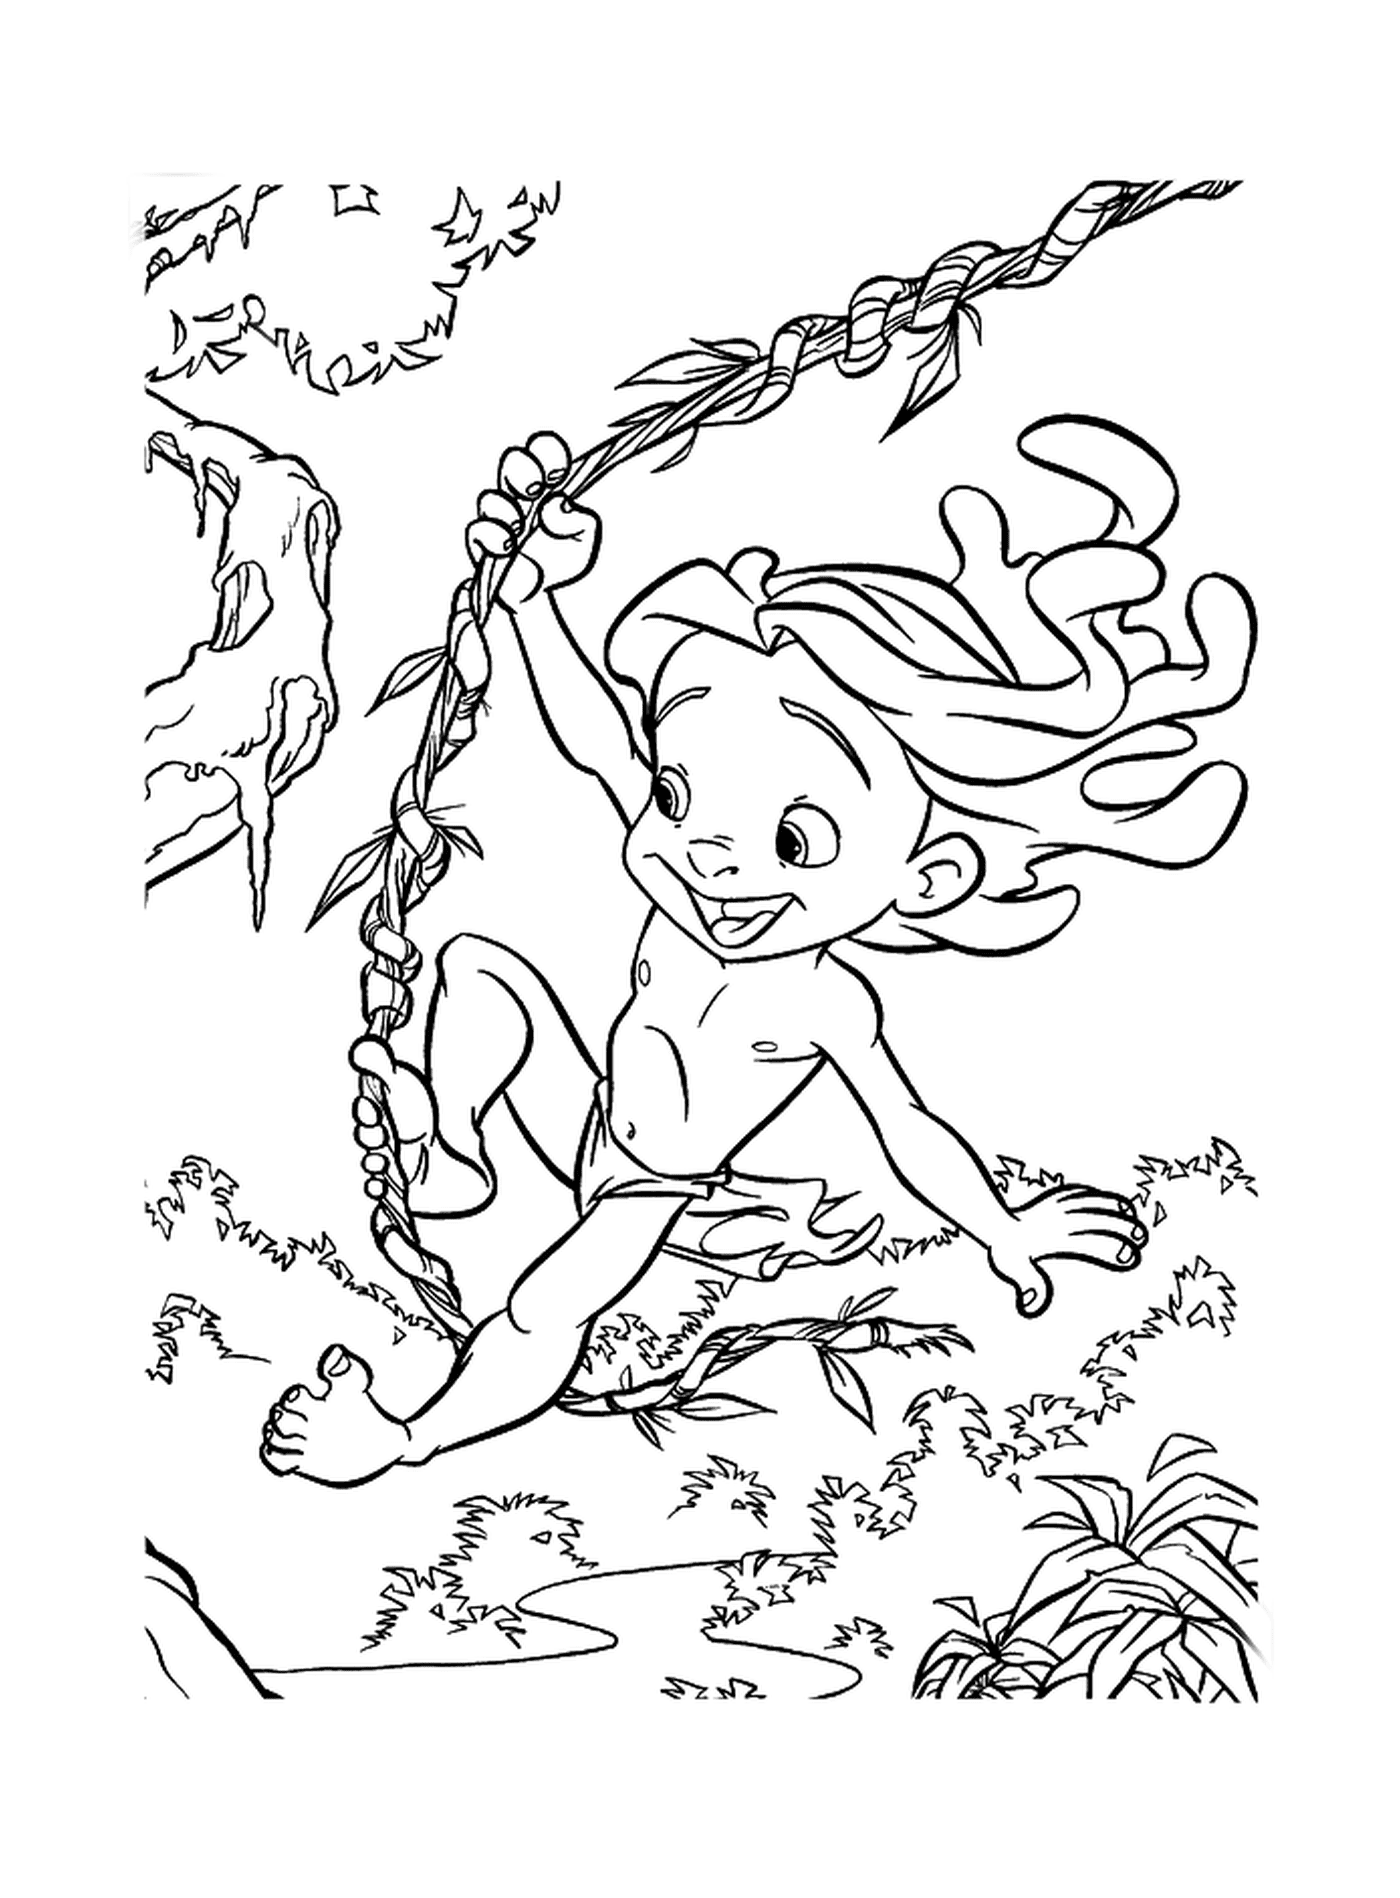  Child swinging on a tree branch 